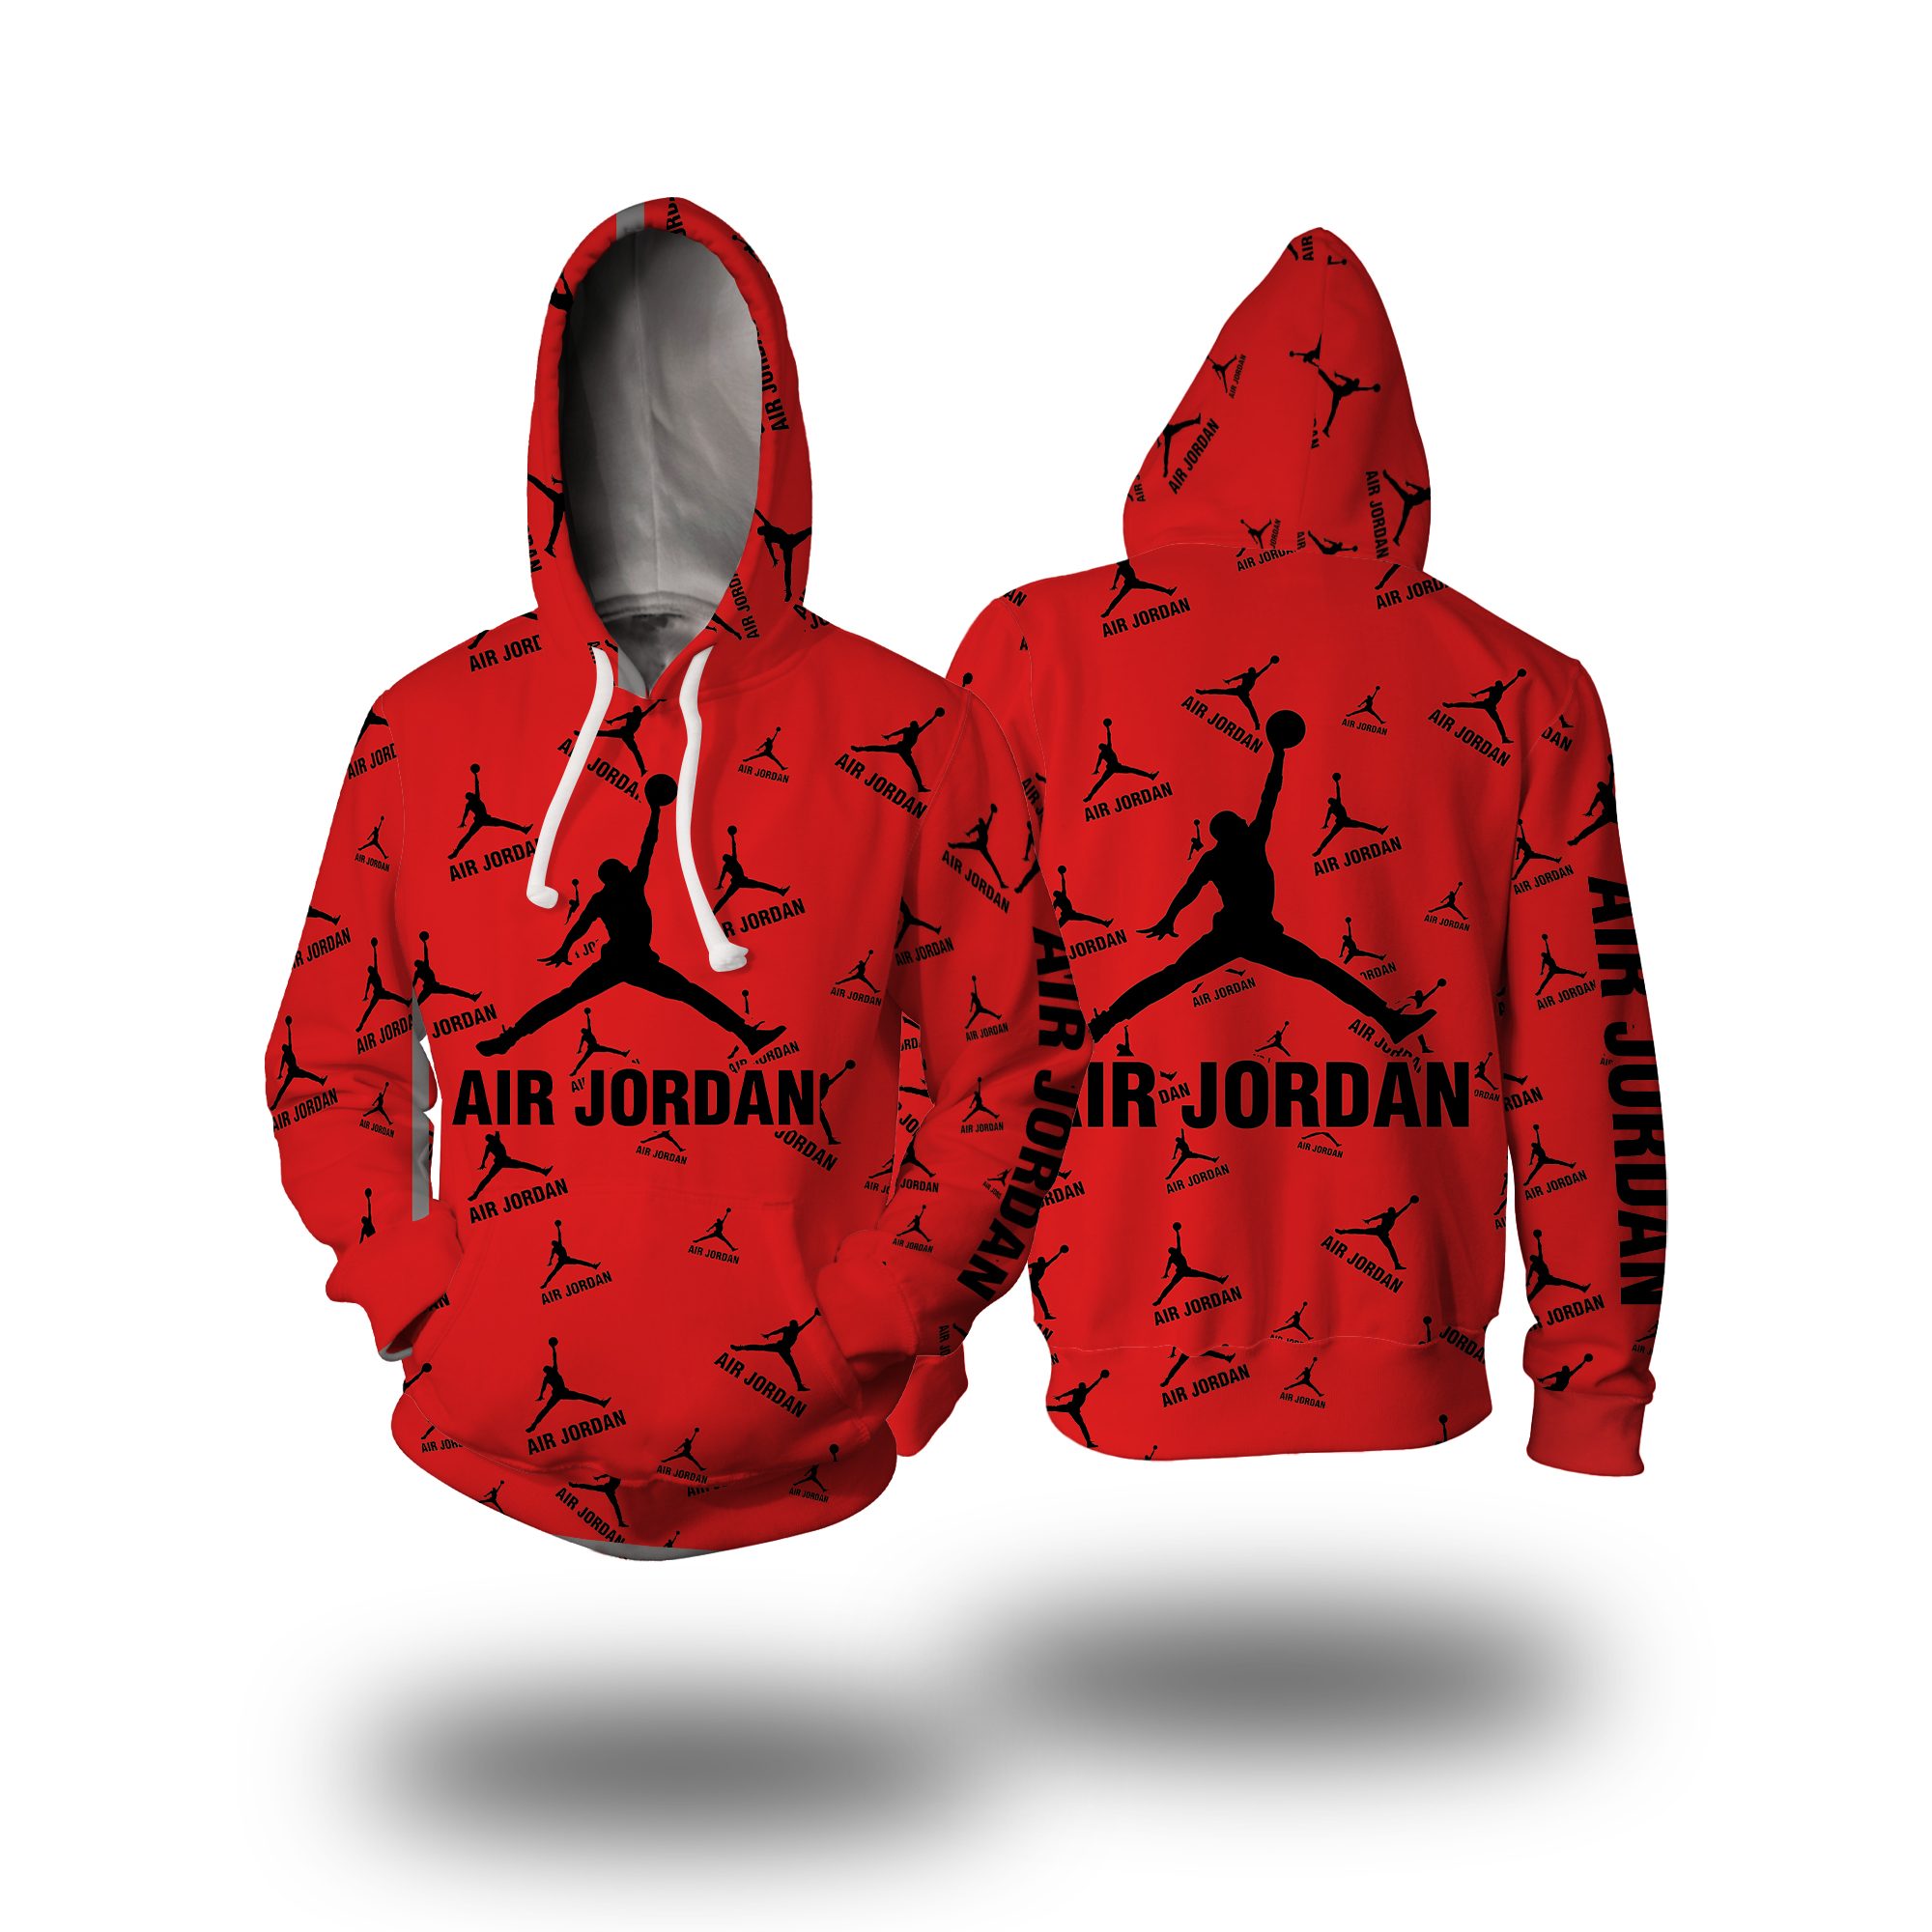 Air Jordan Red Black hoodie and pant